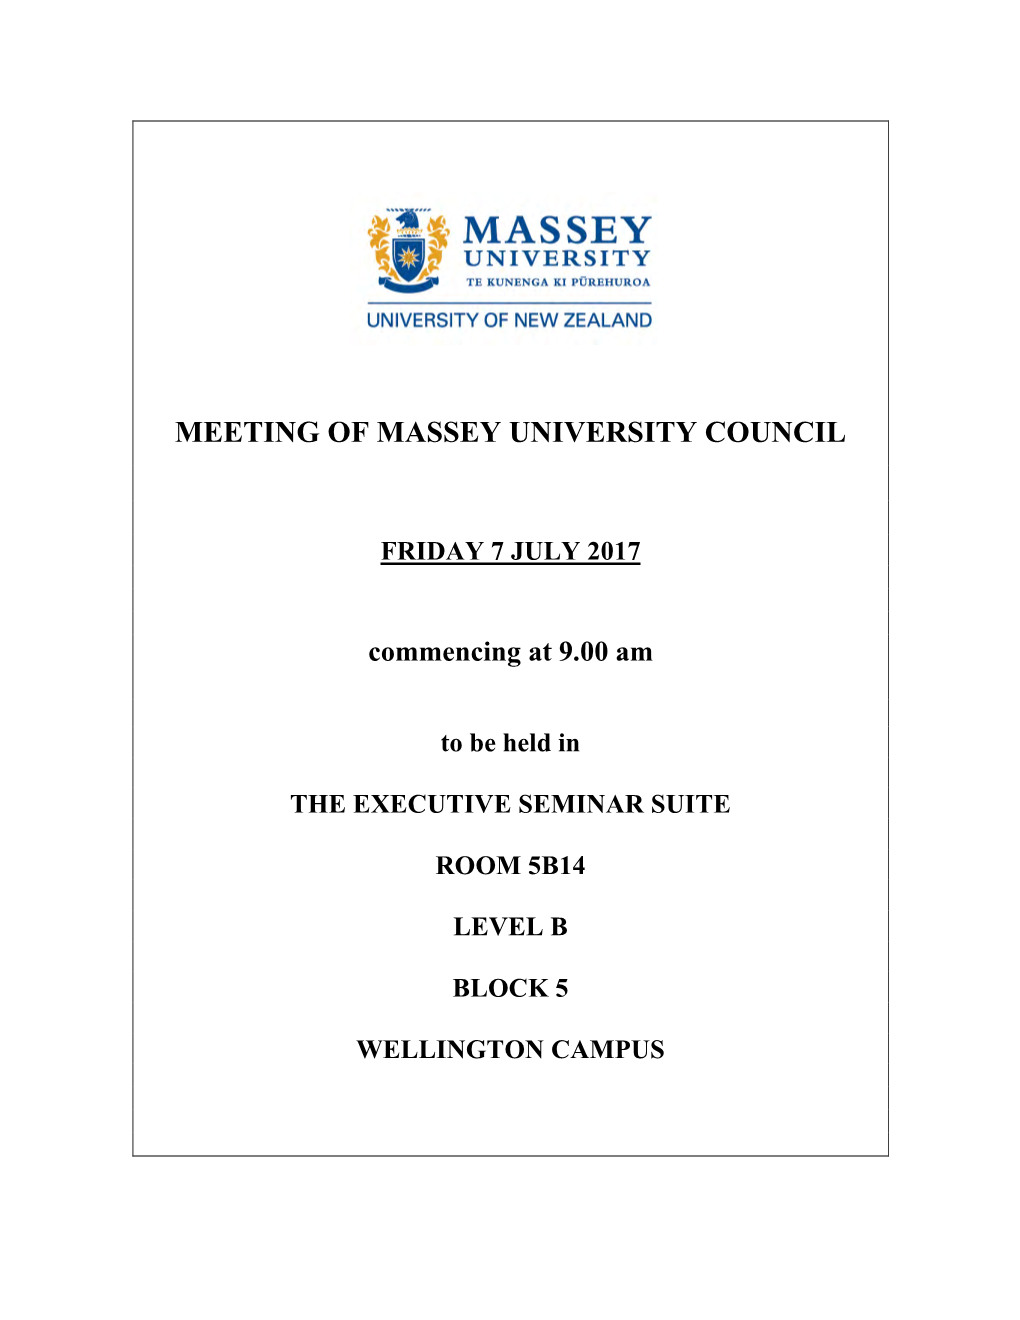 Meeting of Massey University Council